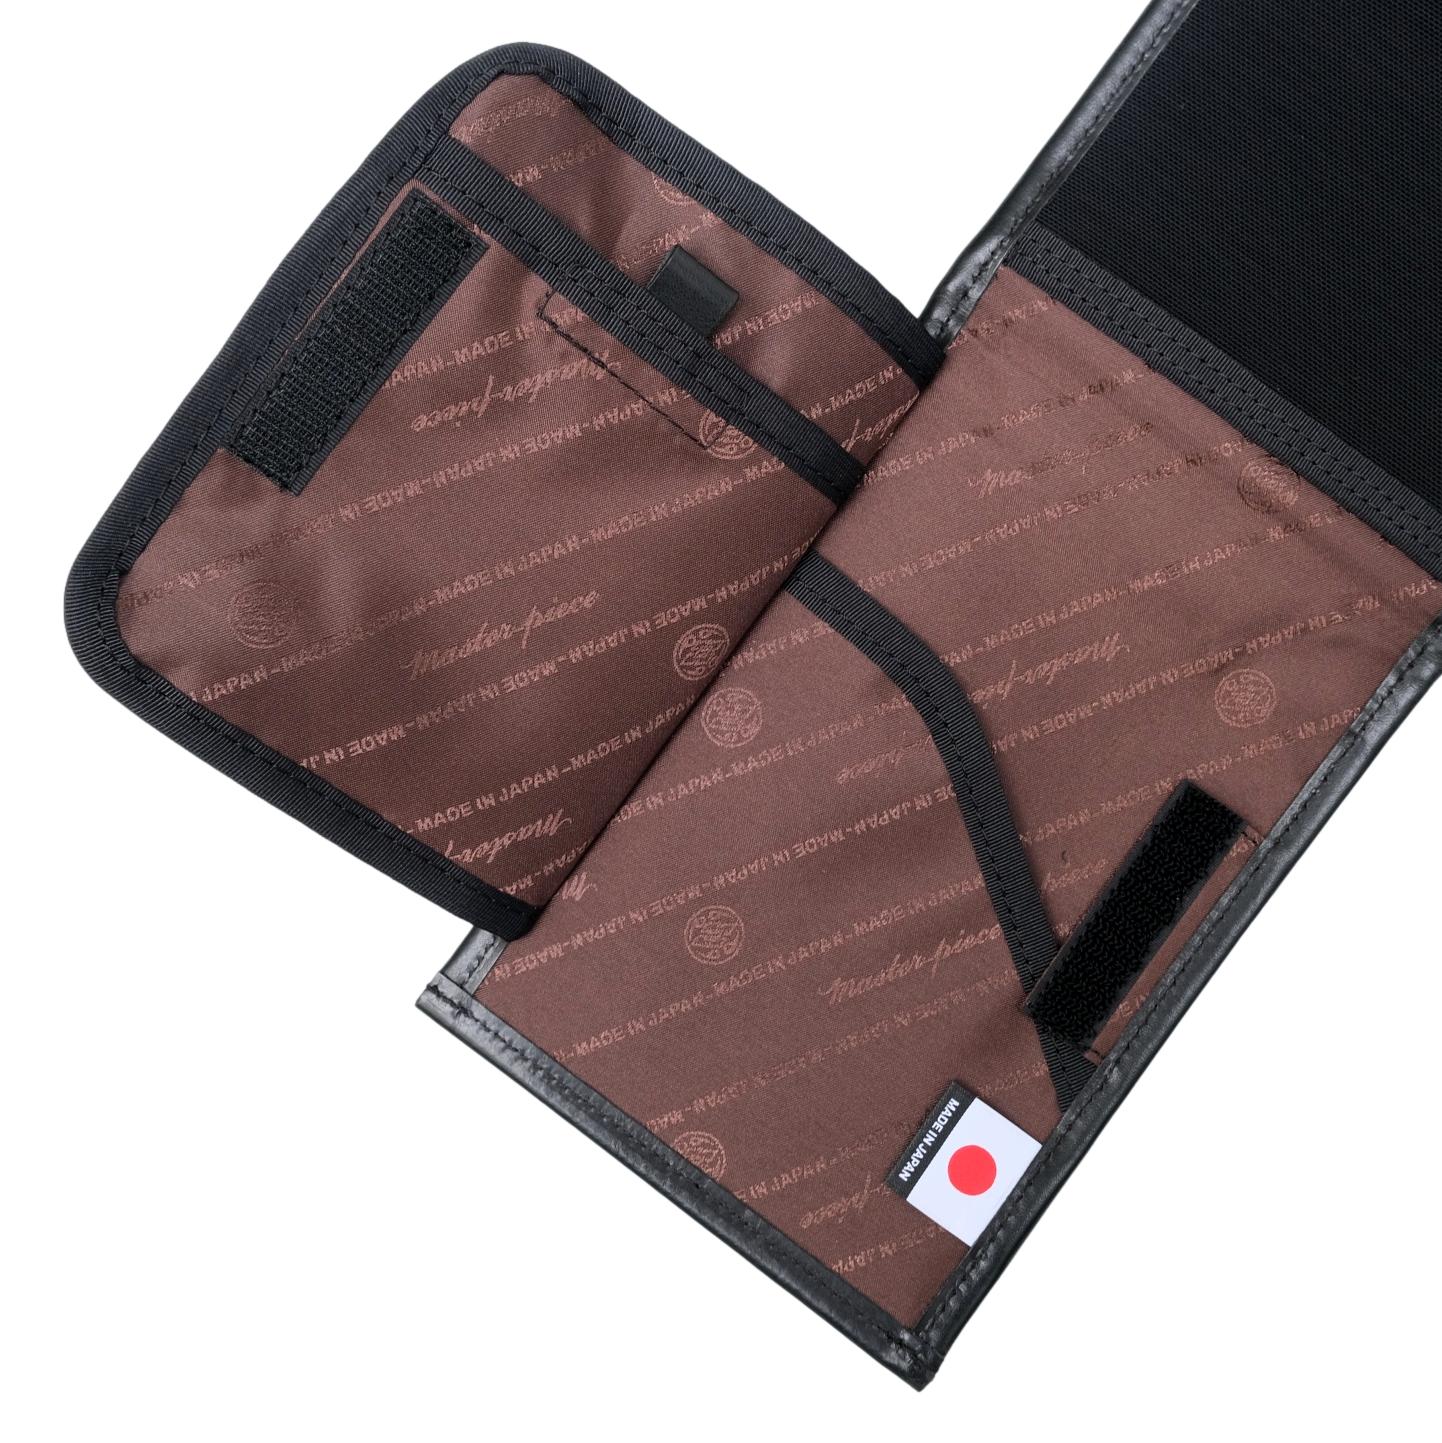 Wallets & Bags by Tatonka with RFID Blocker